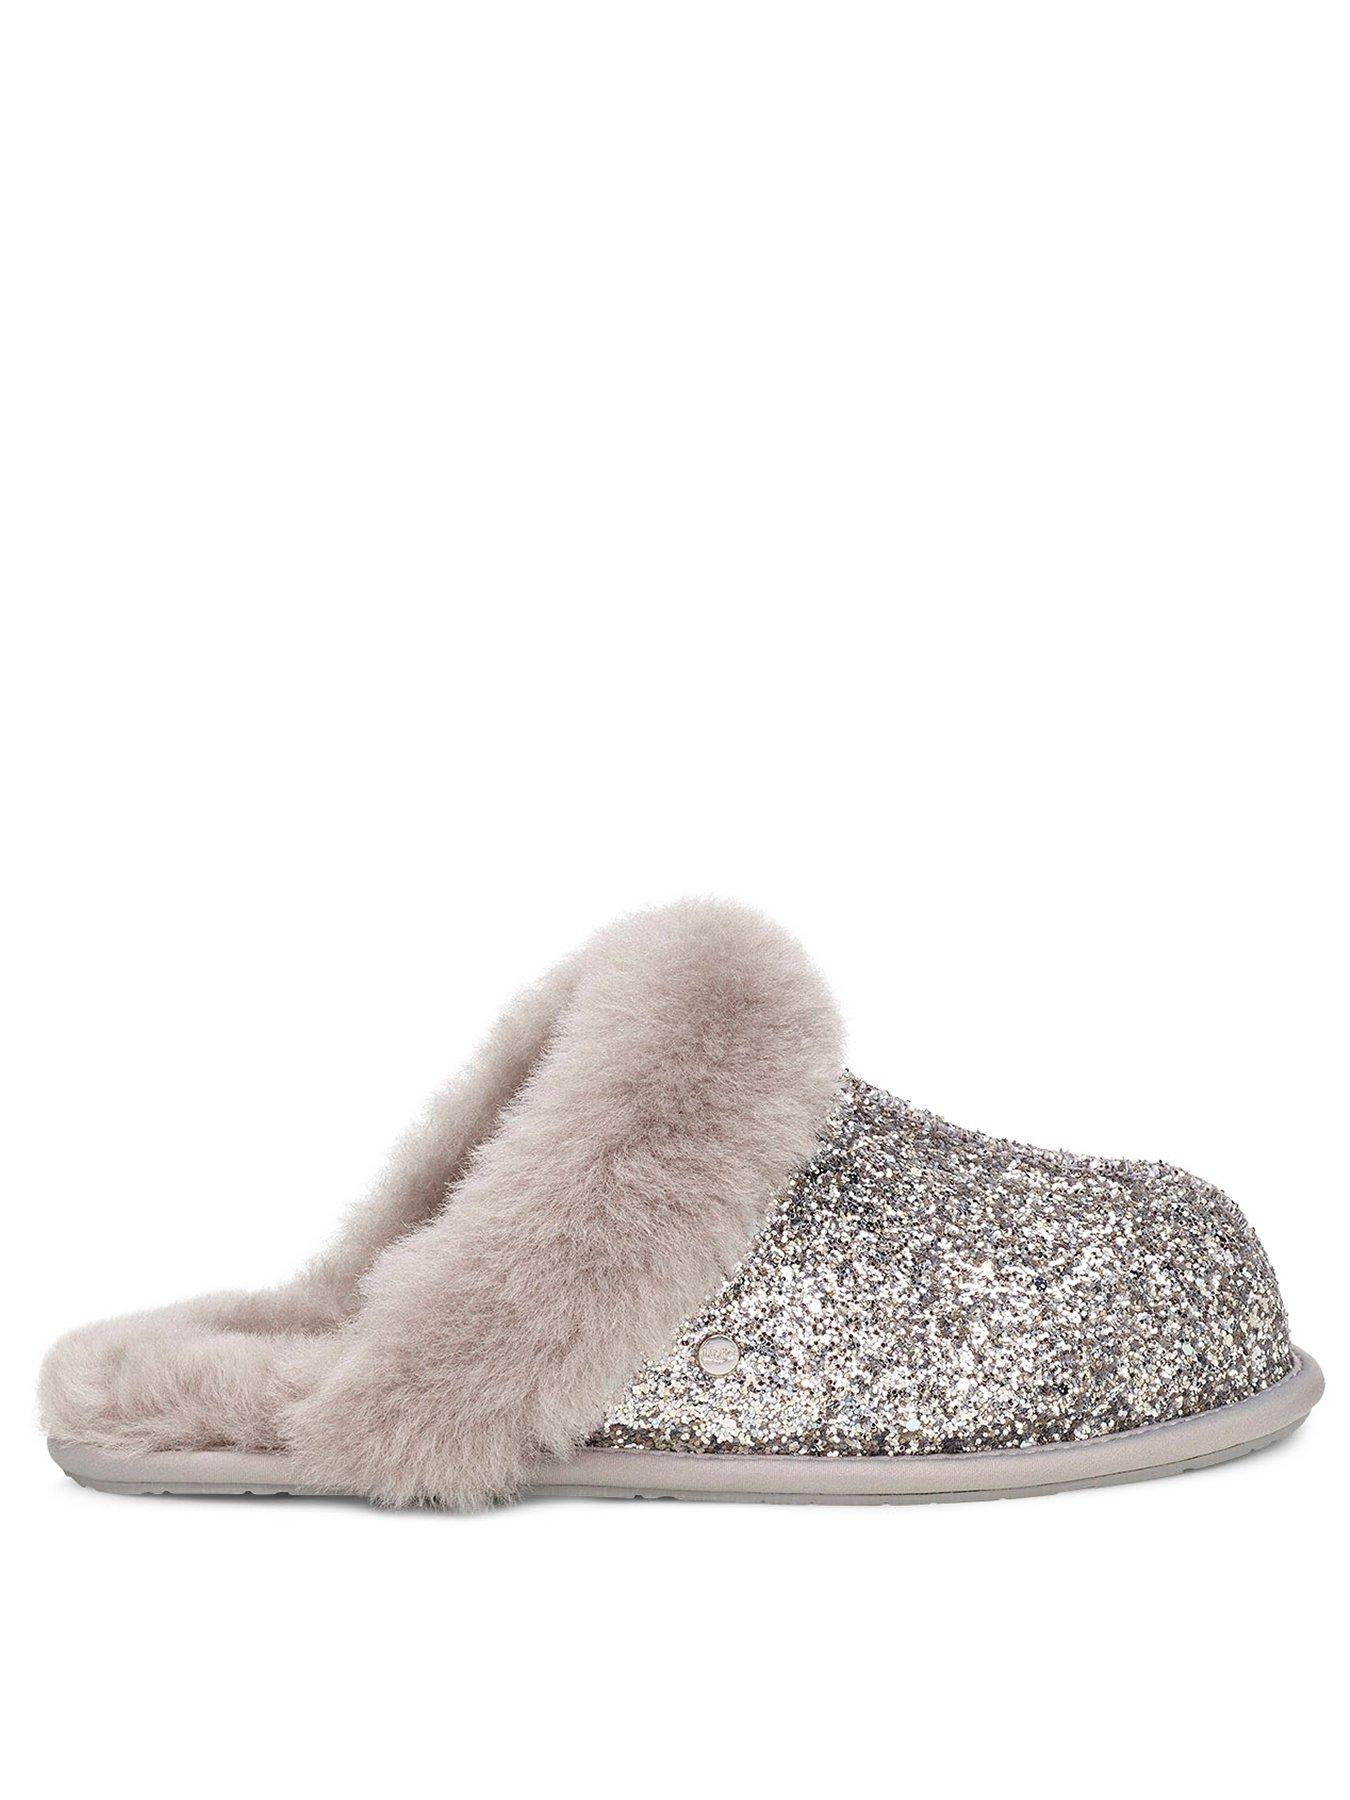 silver glitter ugg slippers 